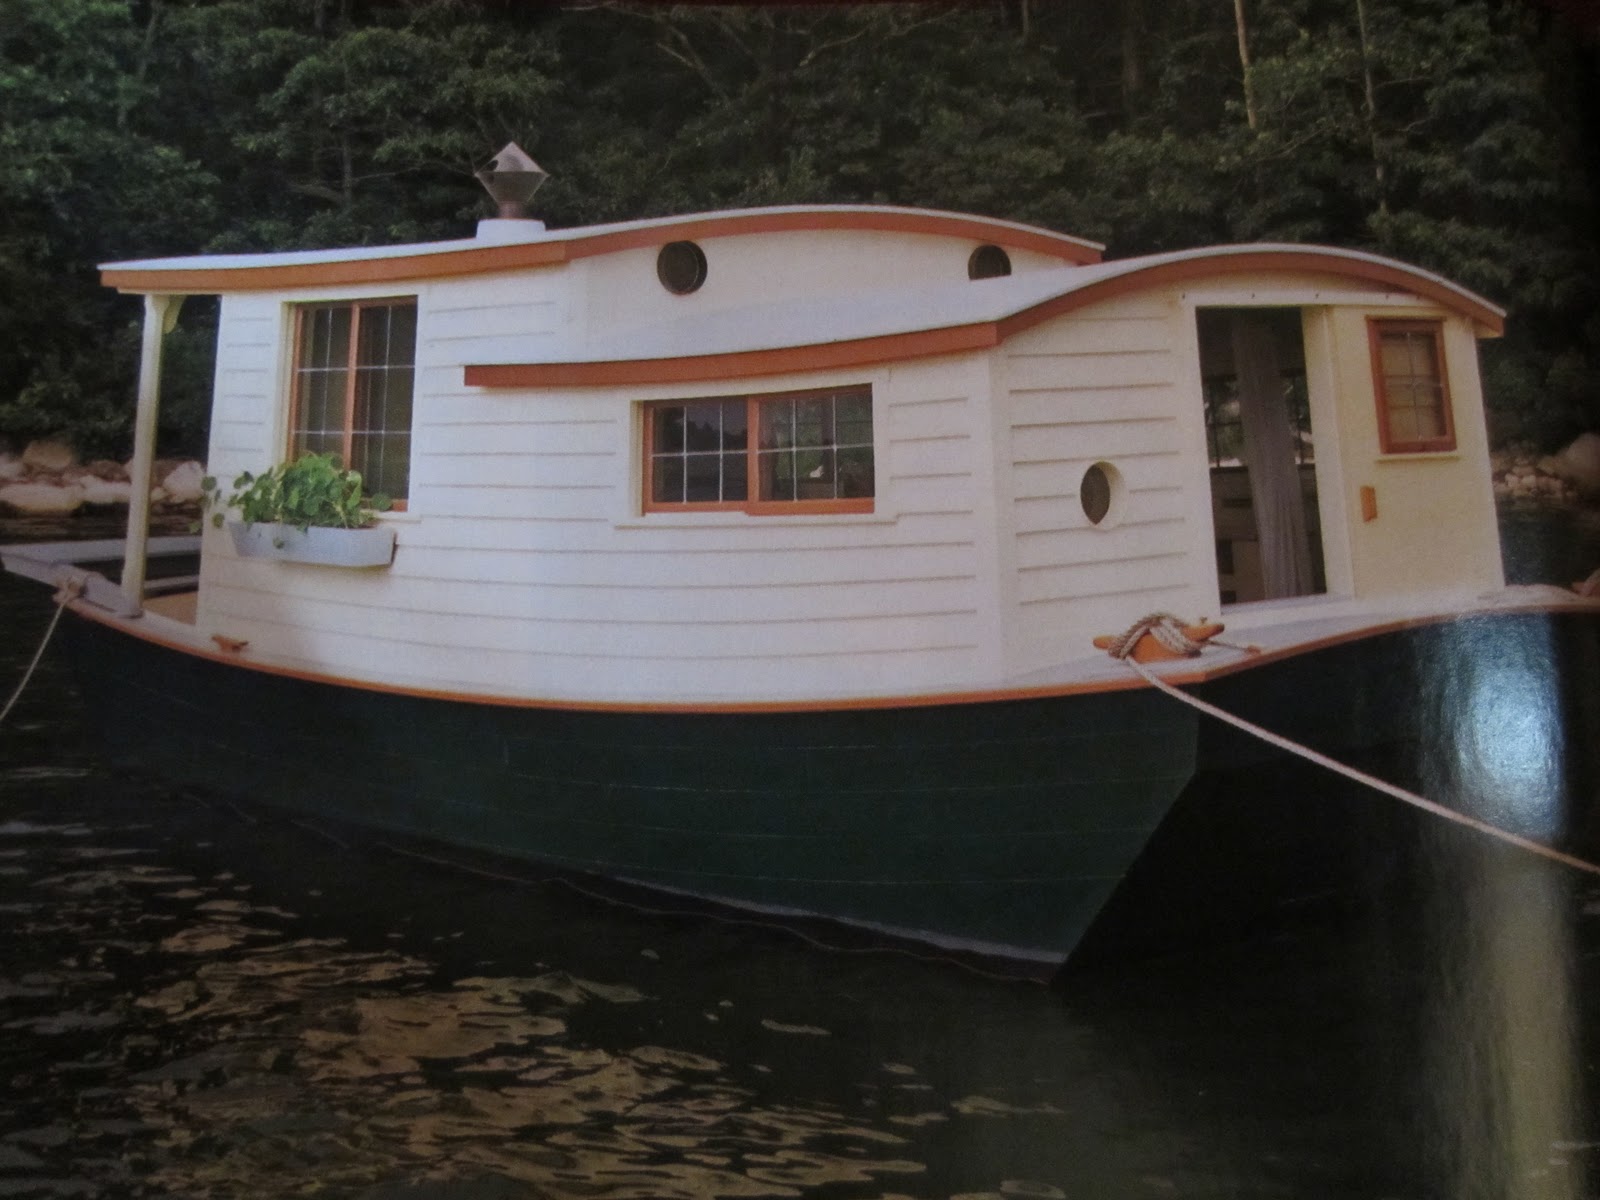 ... .com: An UNBELIEVABLE Shantyboat/Houseboat in Wooden Boat Magazine